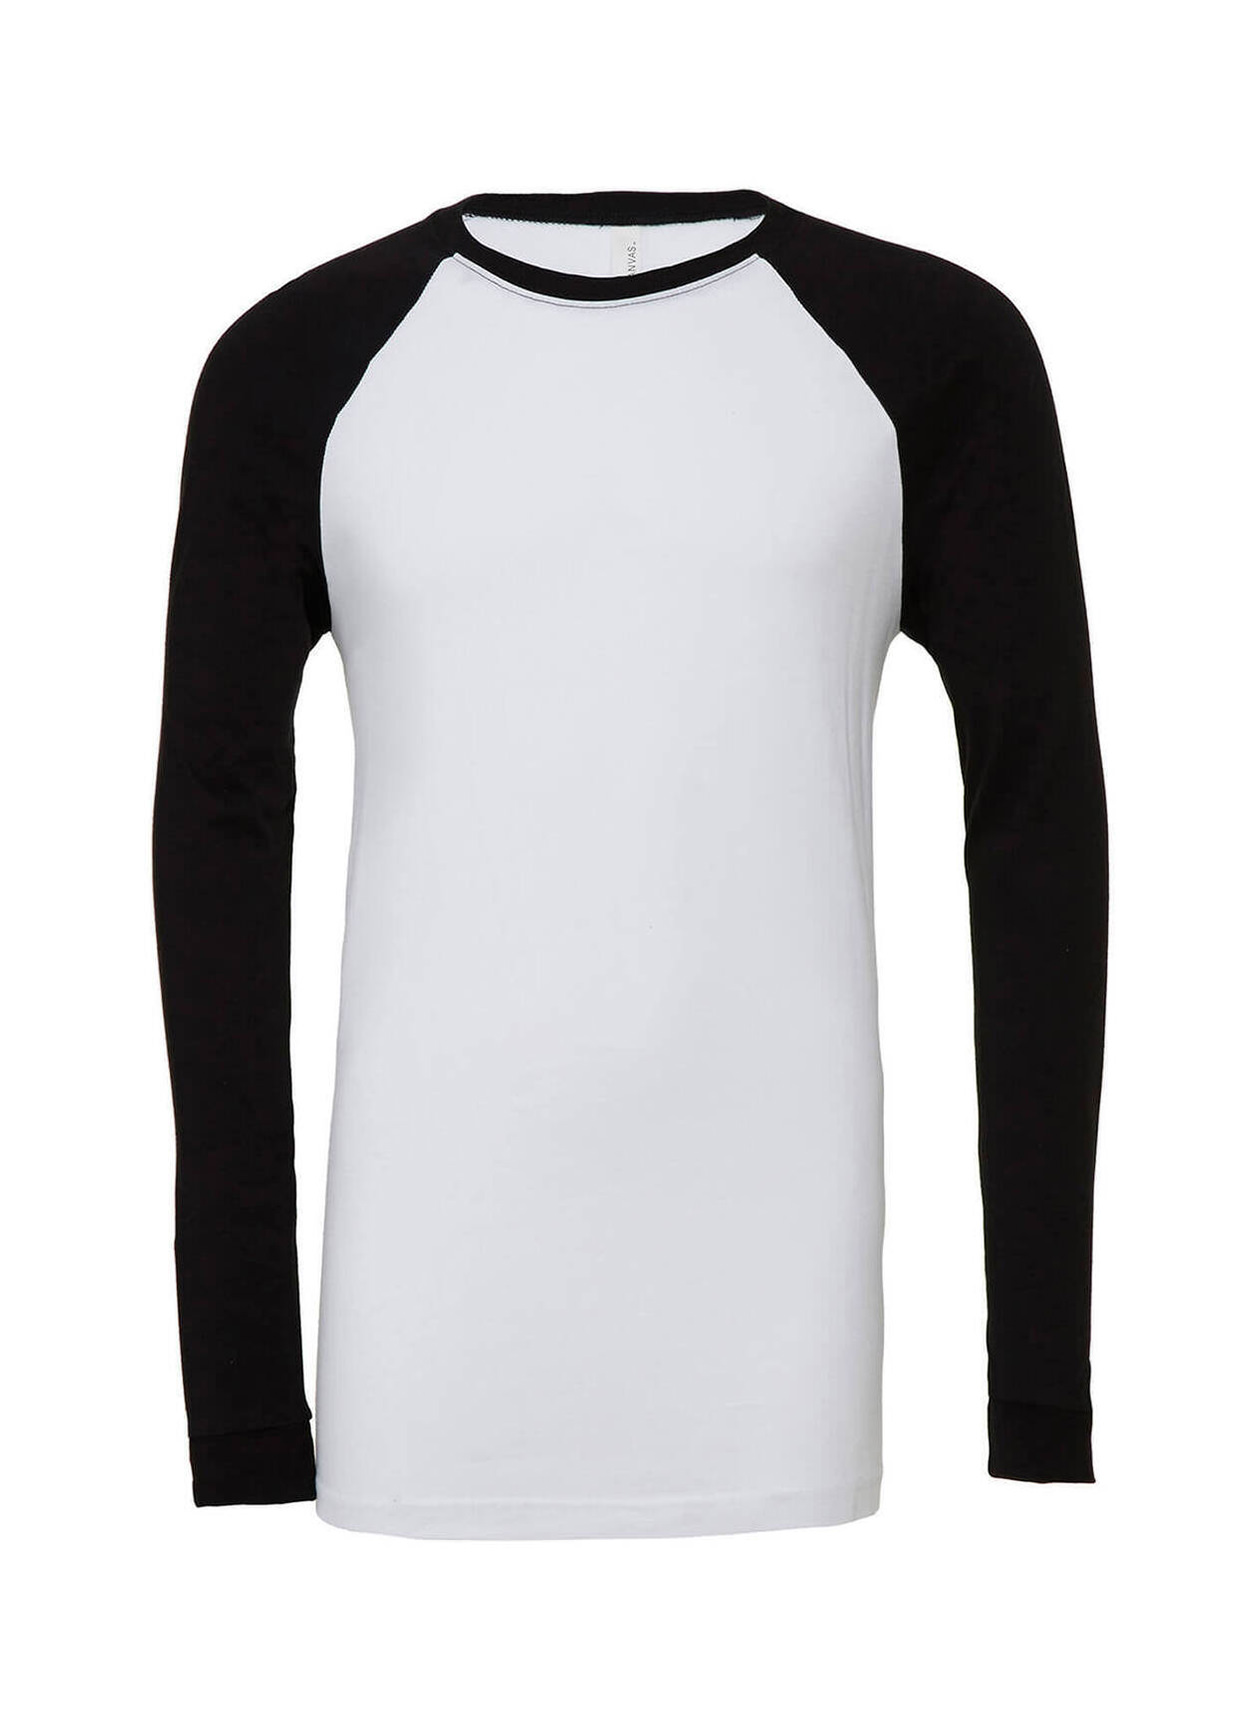 Bella + Canvas Men's White / Black Jersey Long-Sleeve Baseball T-Shirt